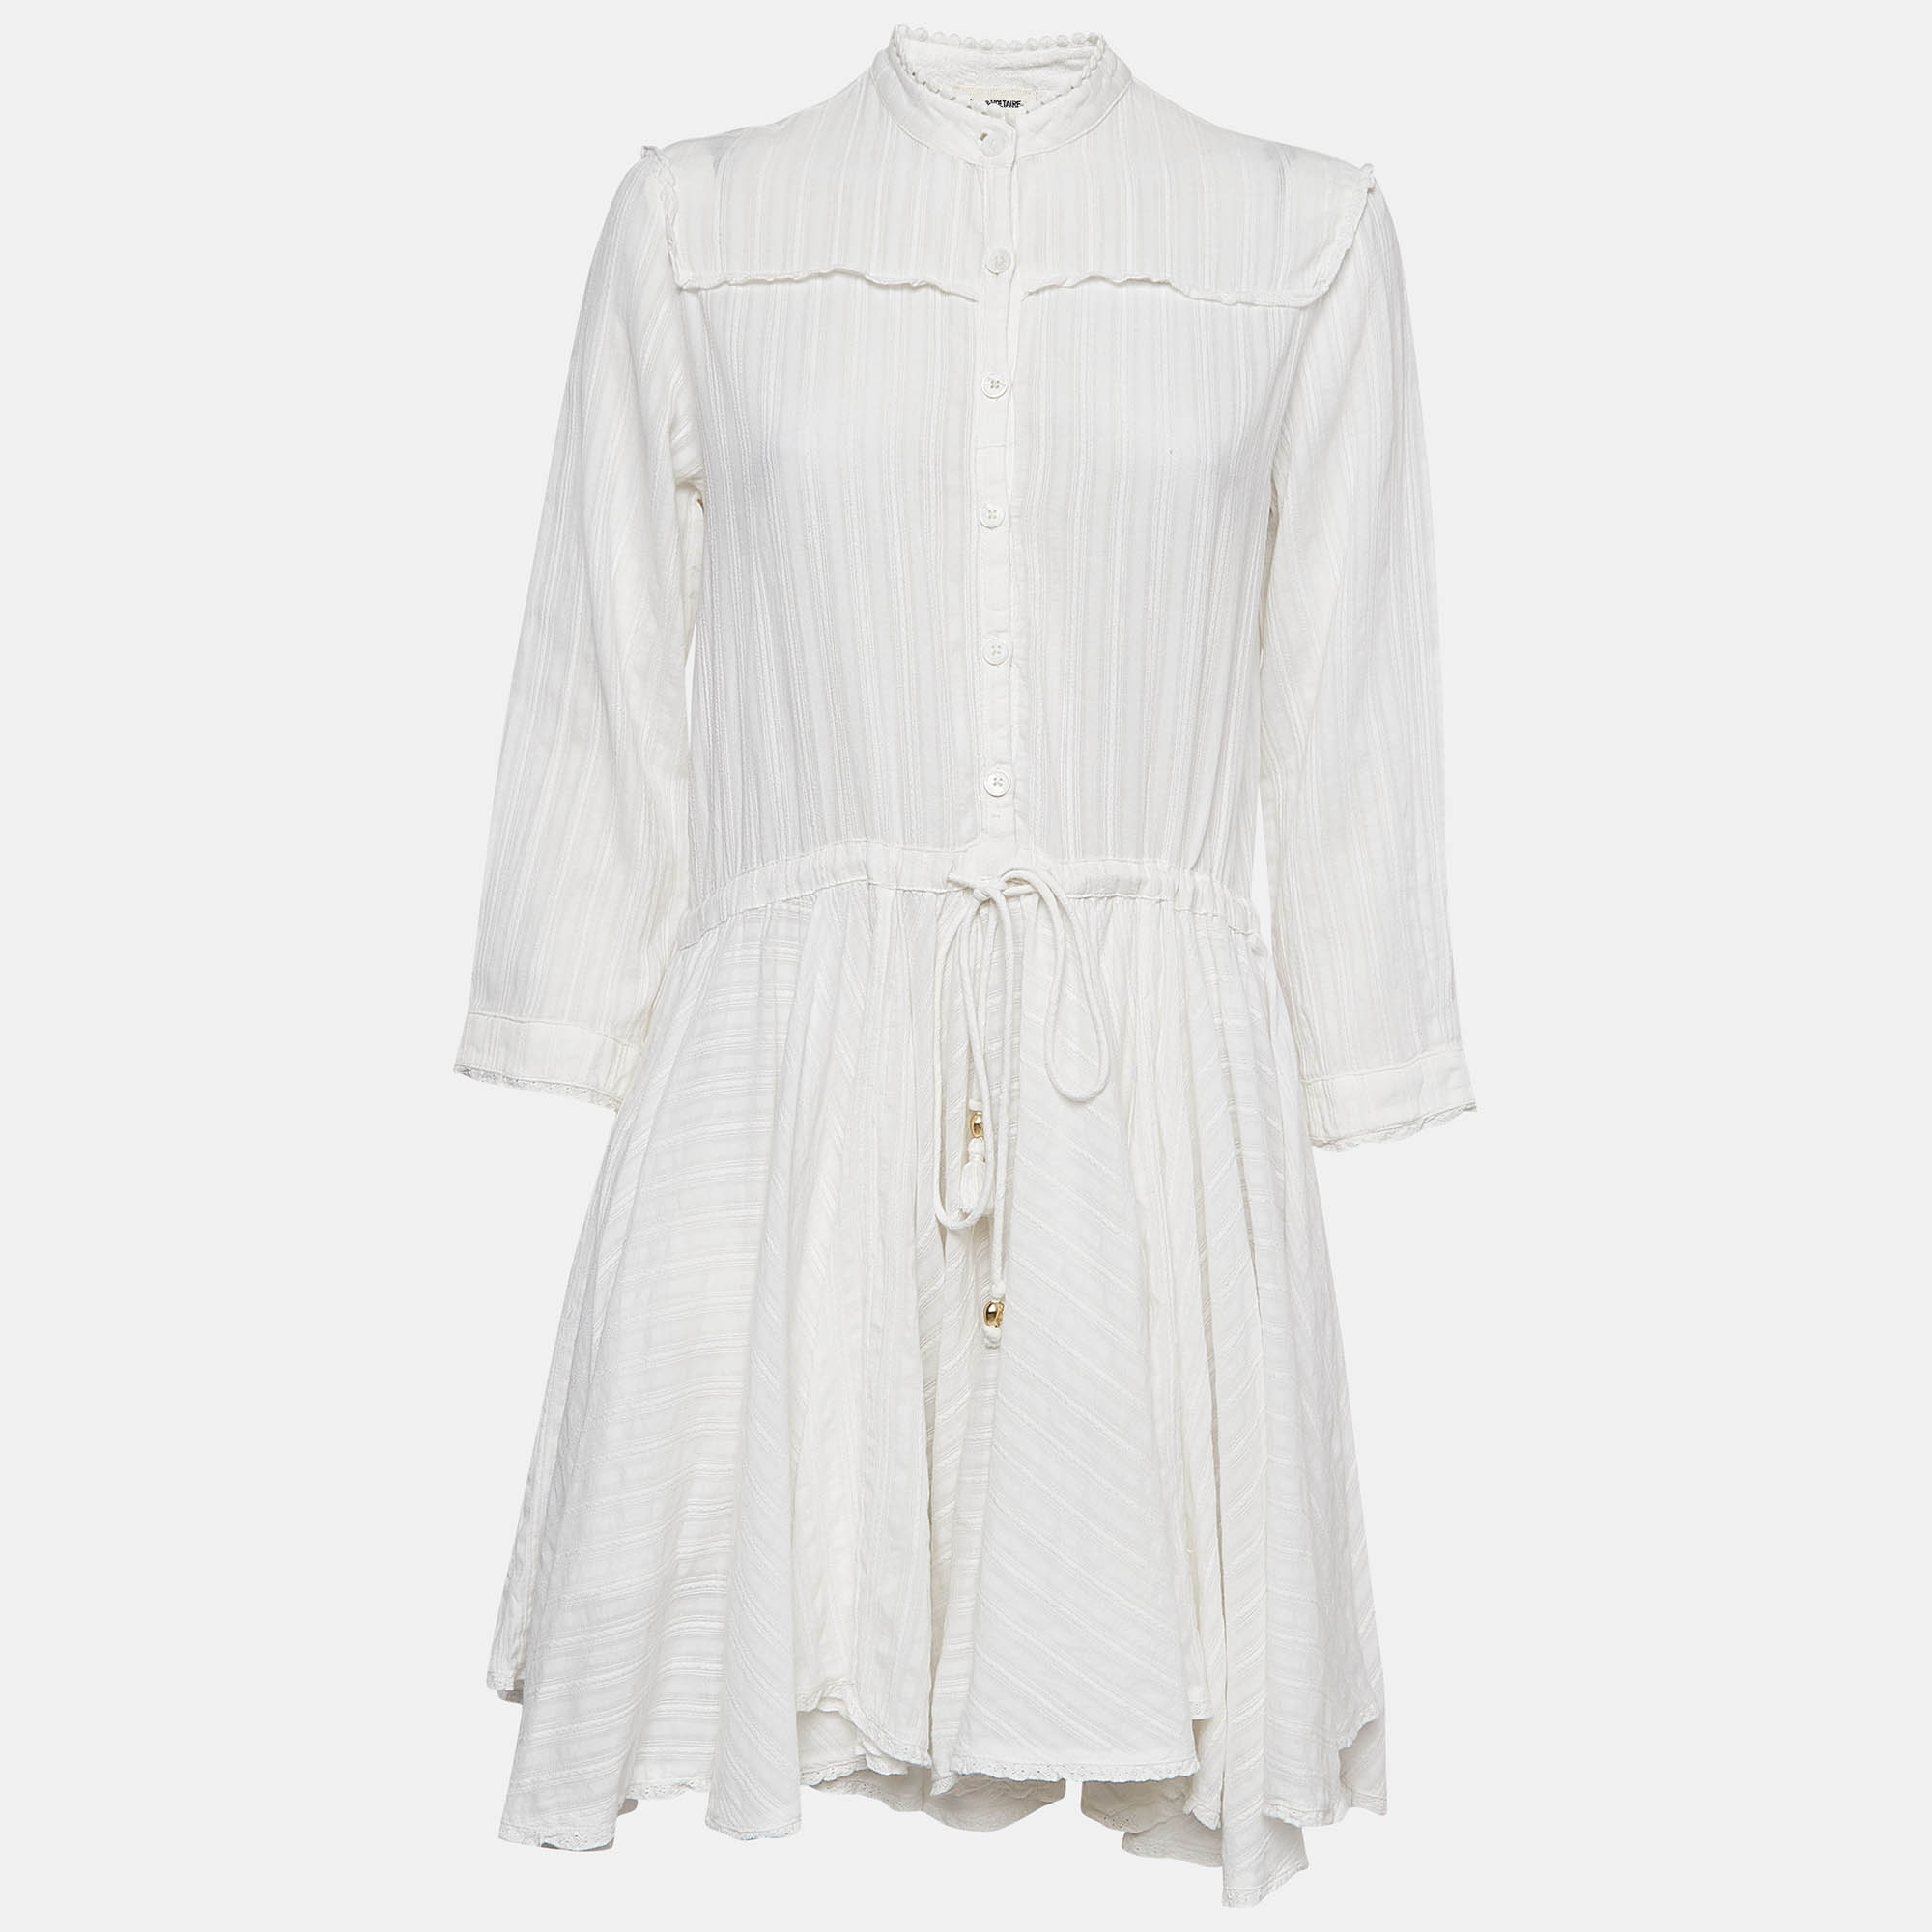 Zadig & voltaire white patterned cotton mini dress s